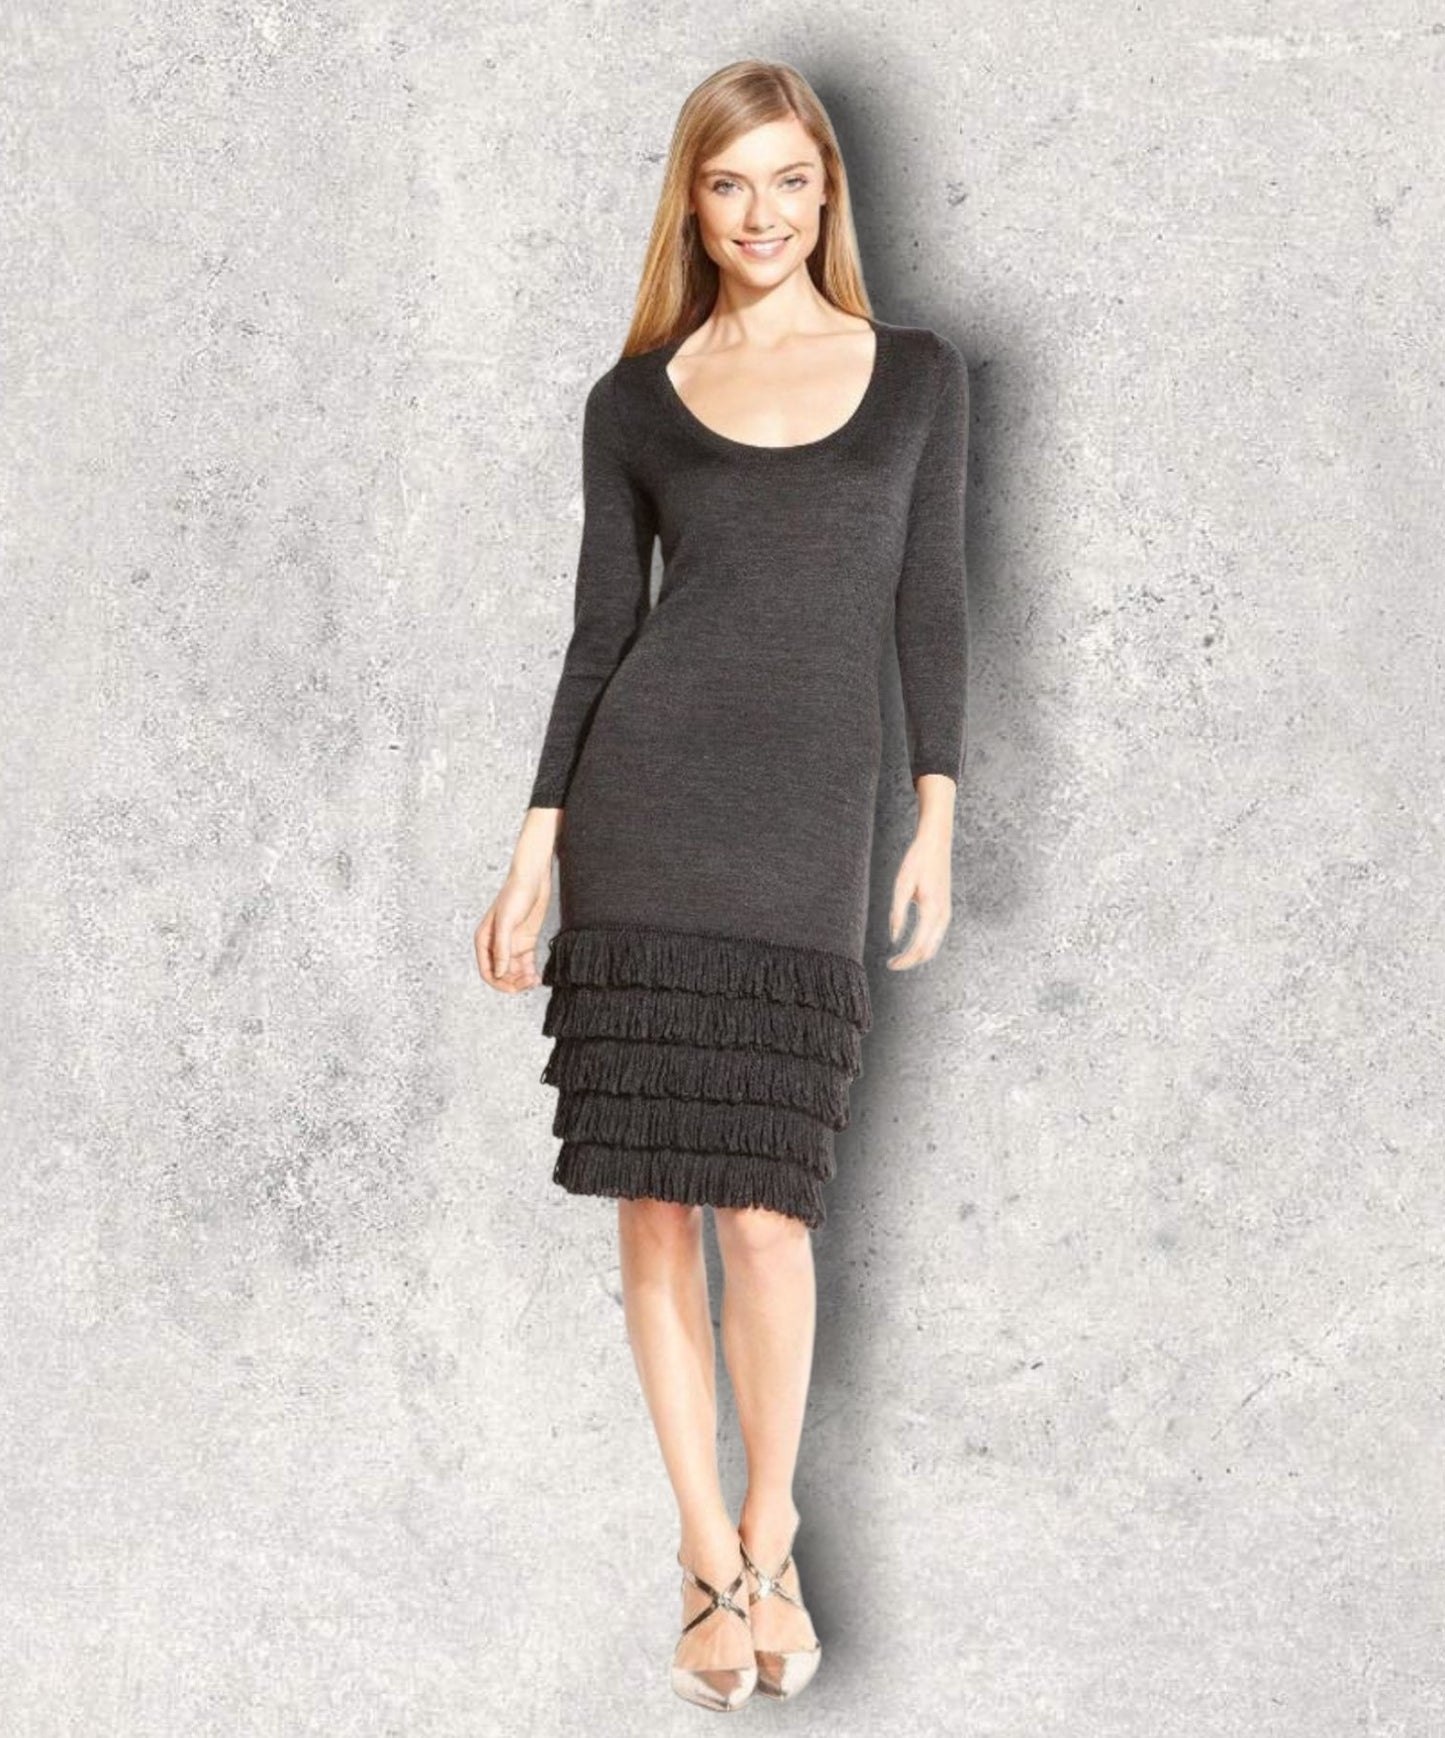 Calvin Klein Charcoal Grey Knit 3/4 Sleeve Jumper Dress Size L UK 16 US 12 EU 44 Timeless Fashions